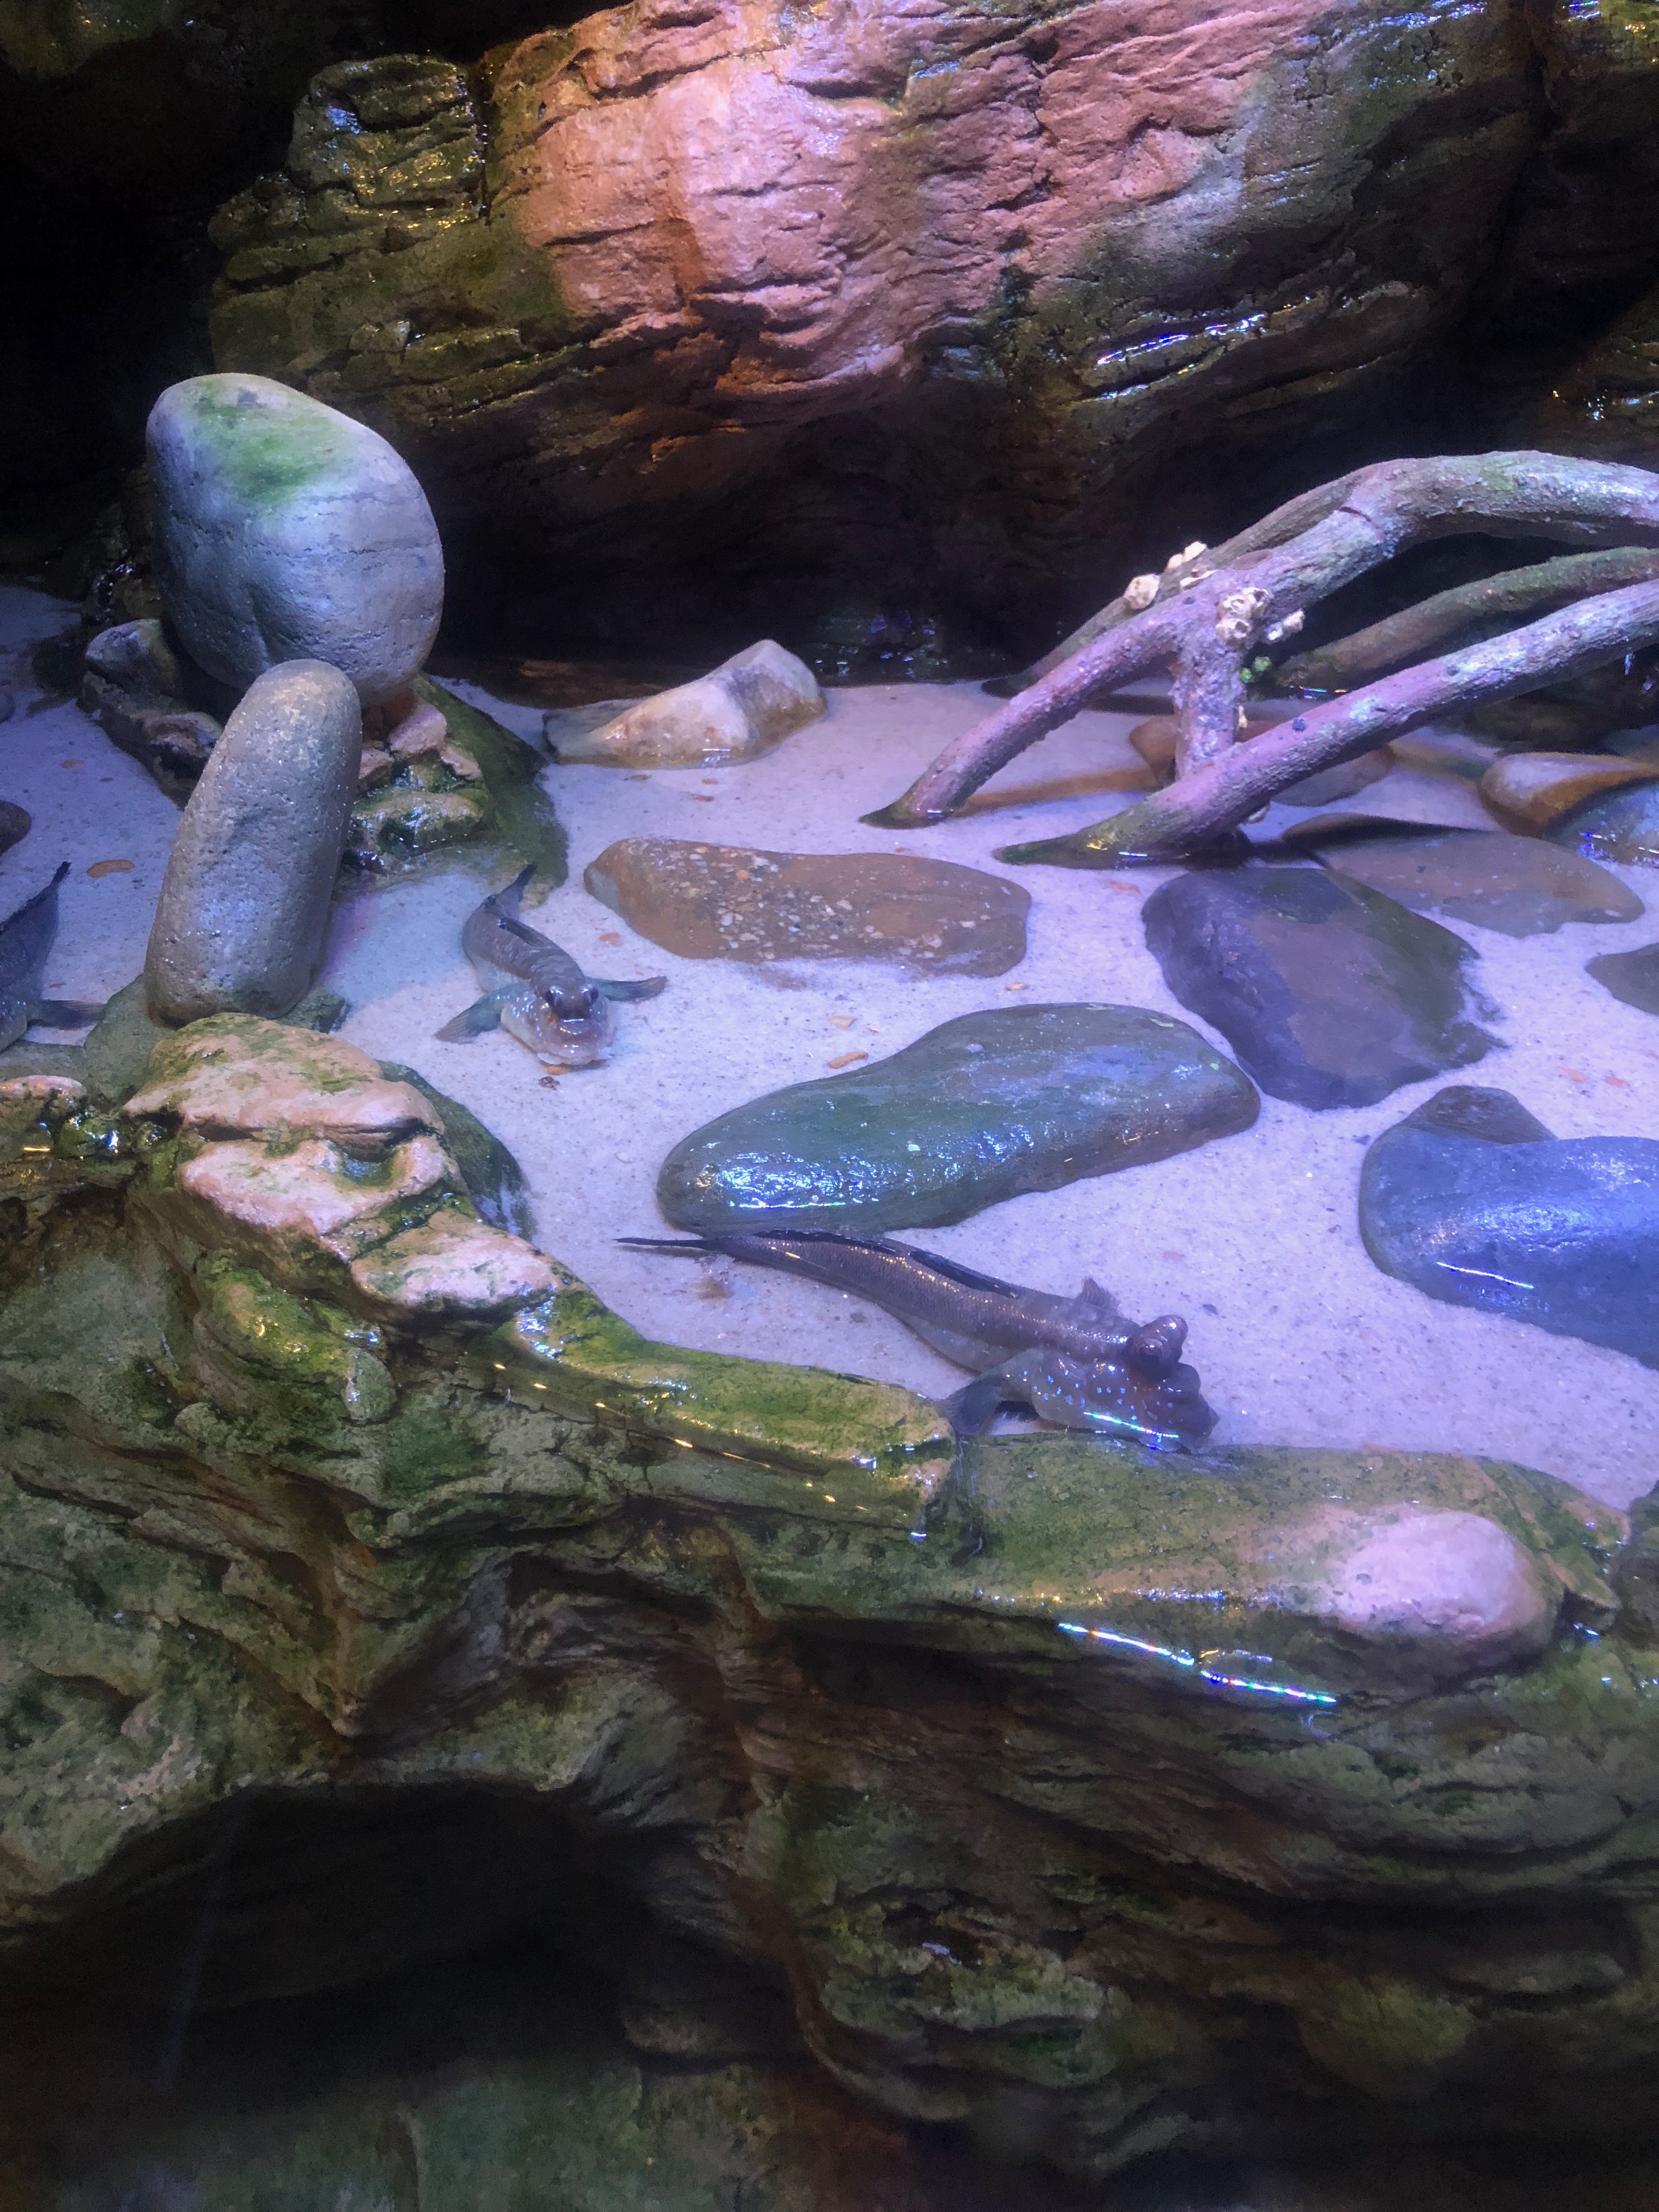 Mudskippers - Ripley's Aquarium in Gatlinburg